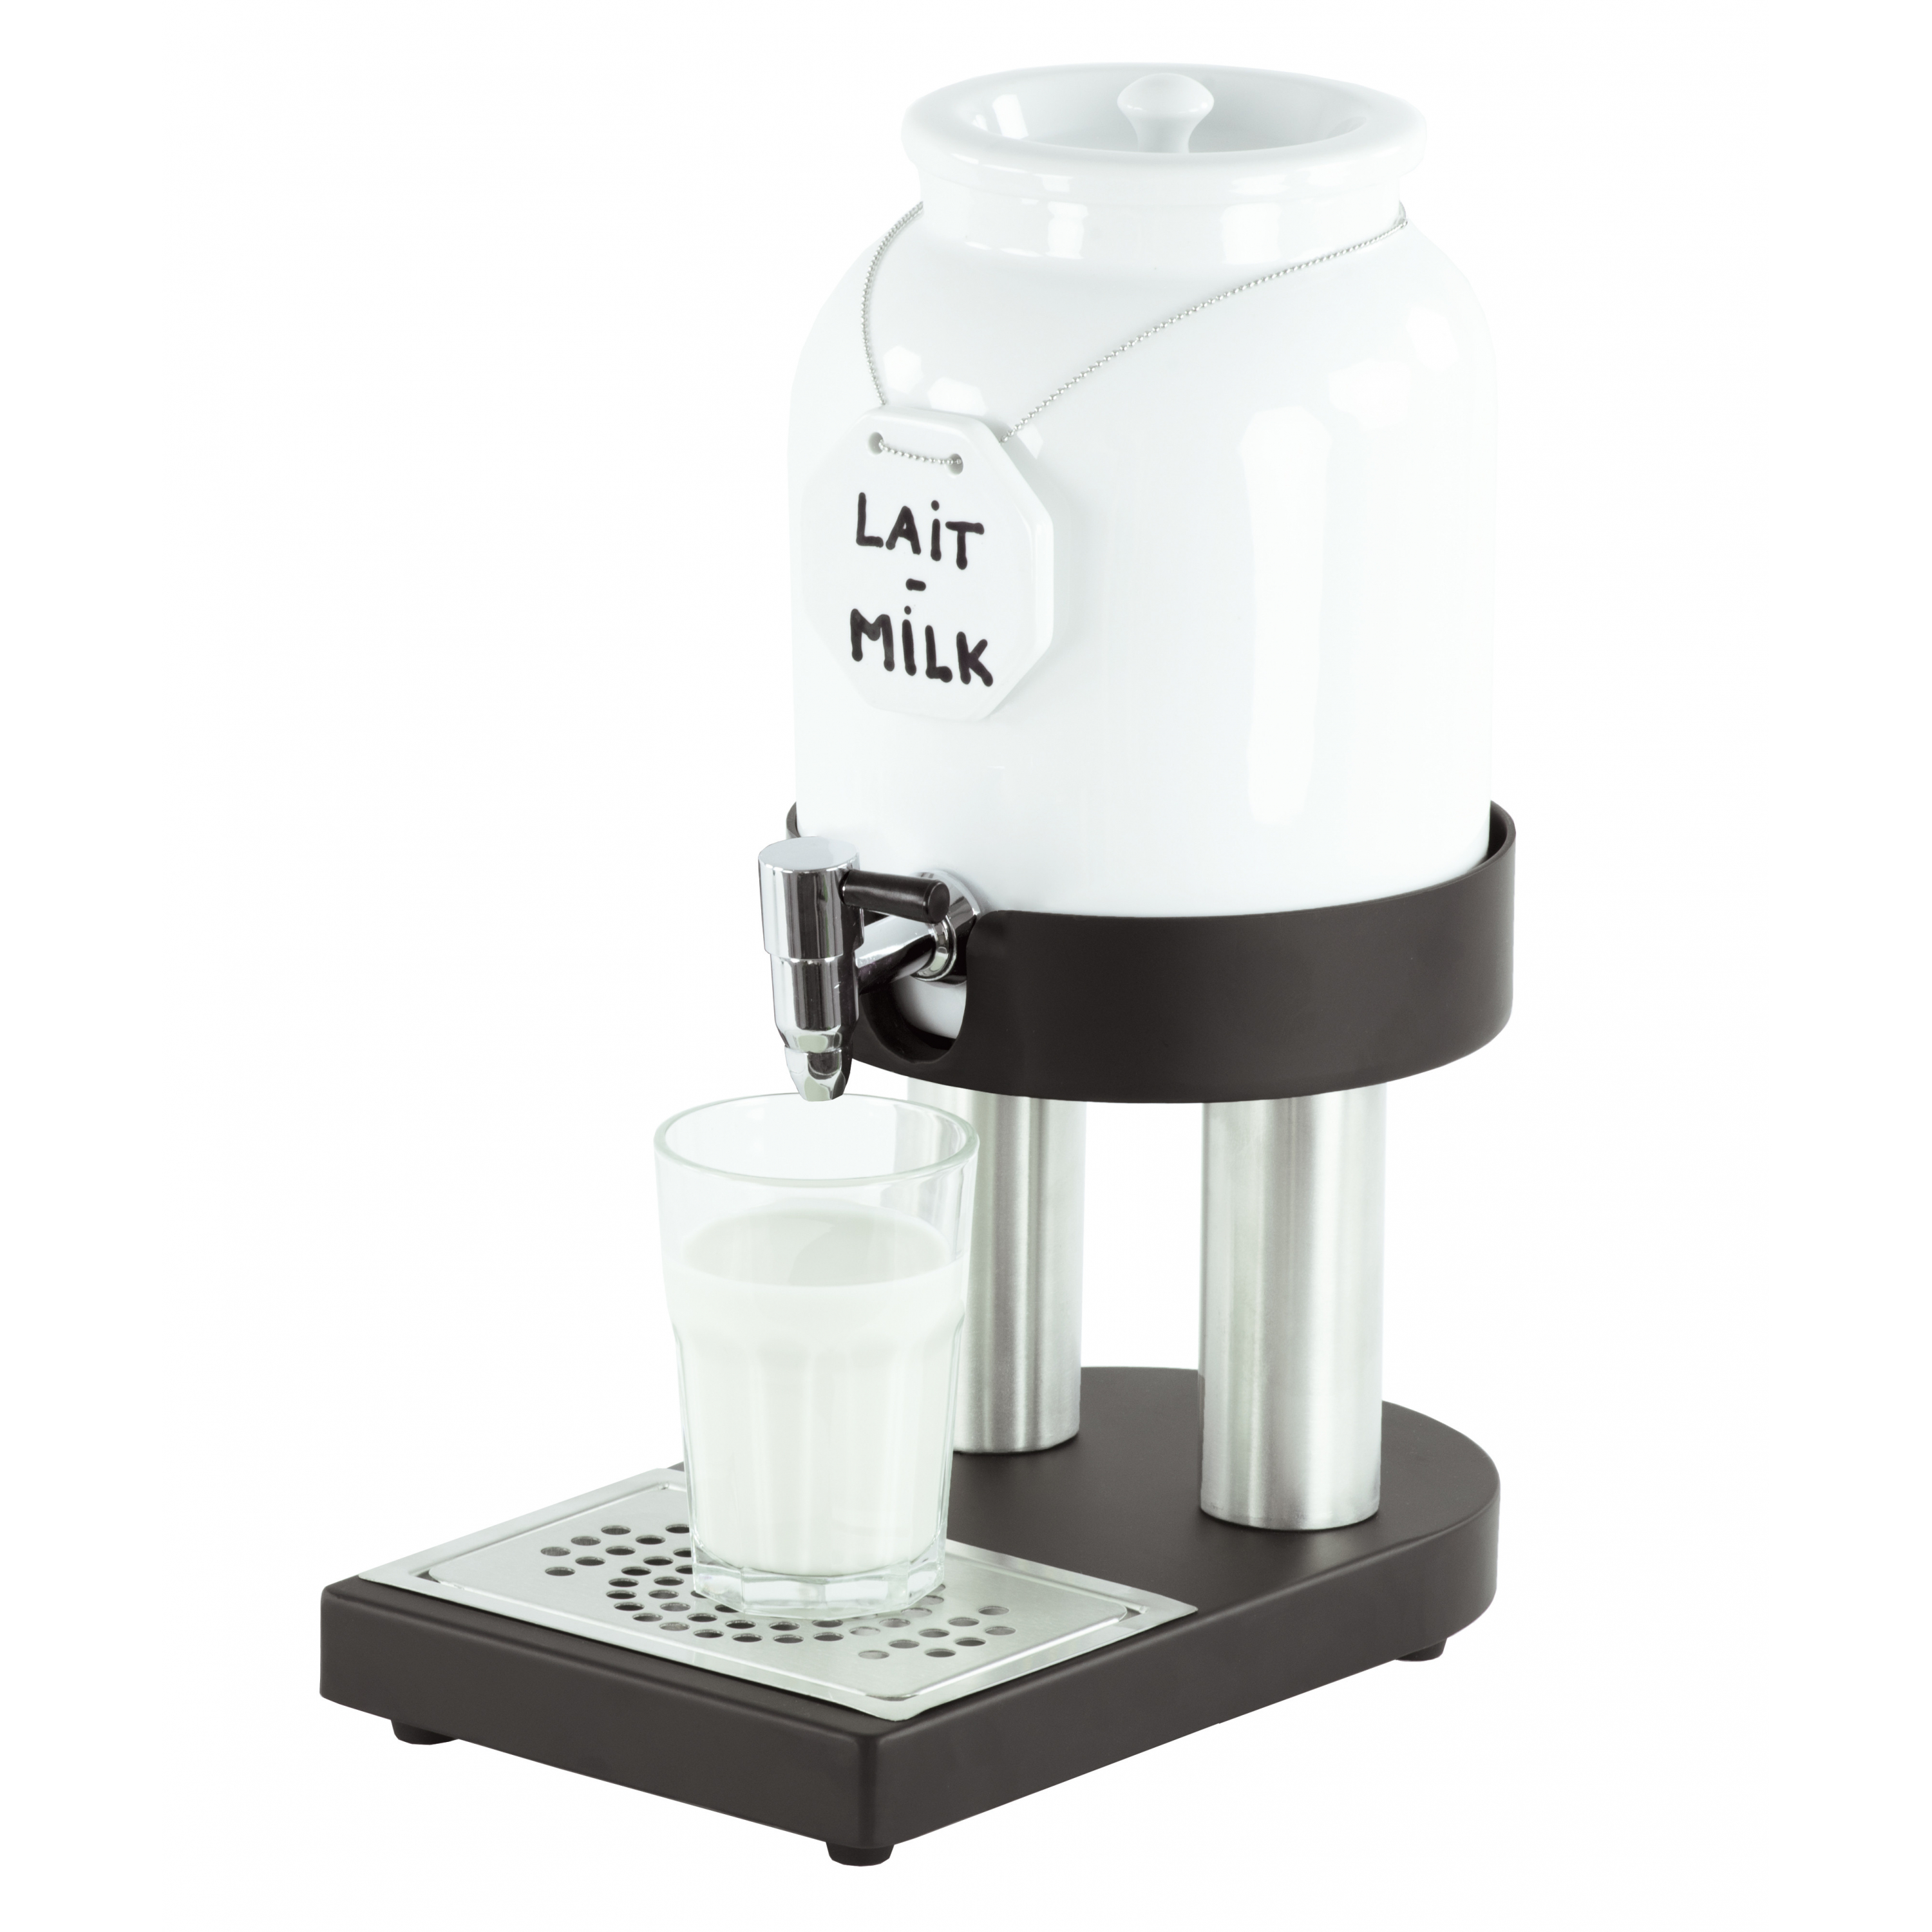 Porcelain cold milk dispenser 4L professional Casselin